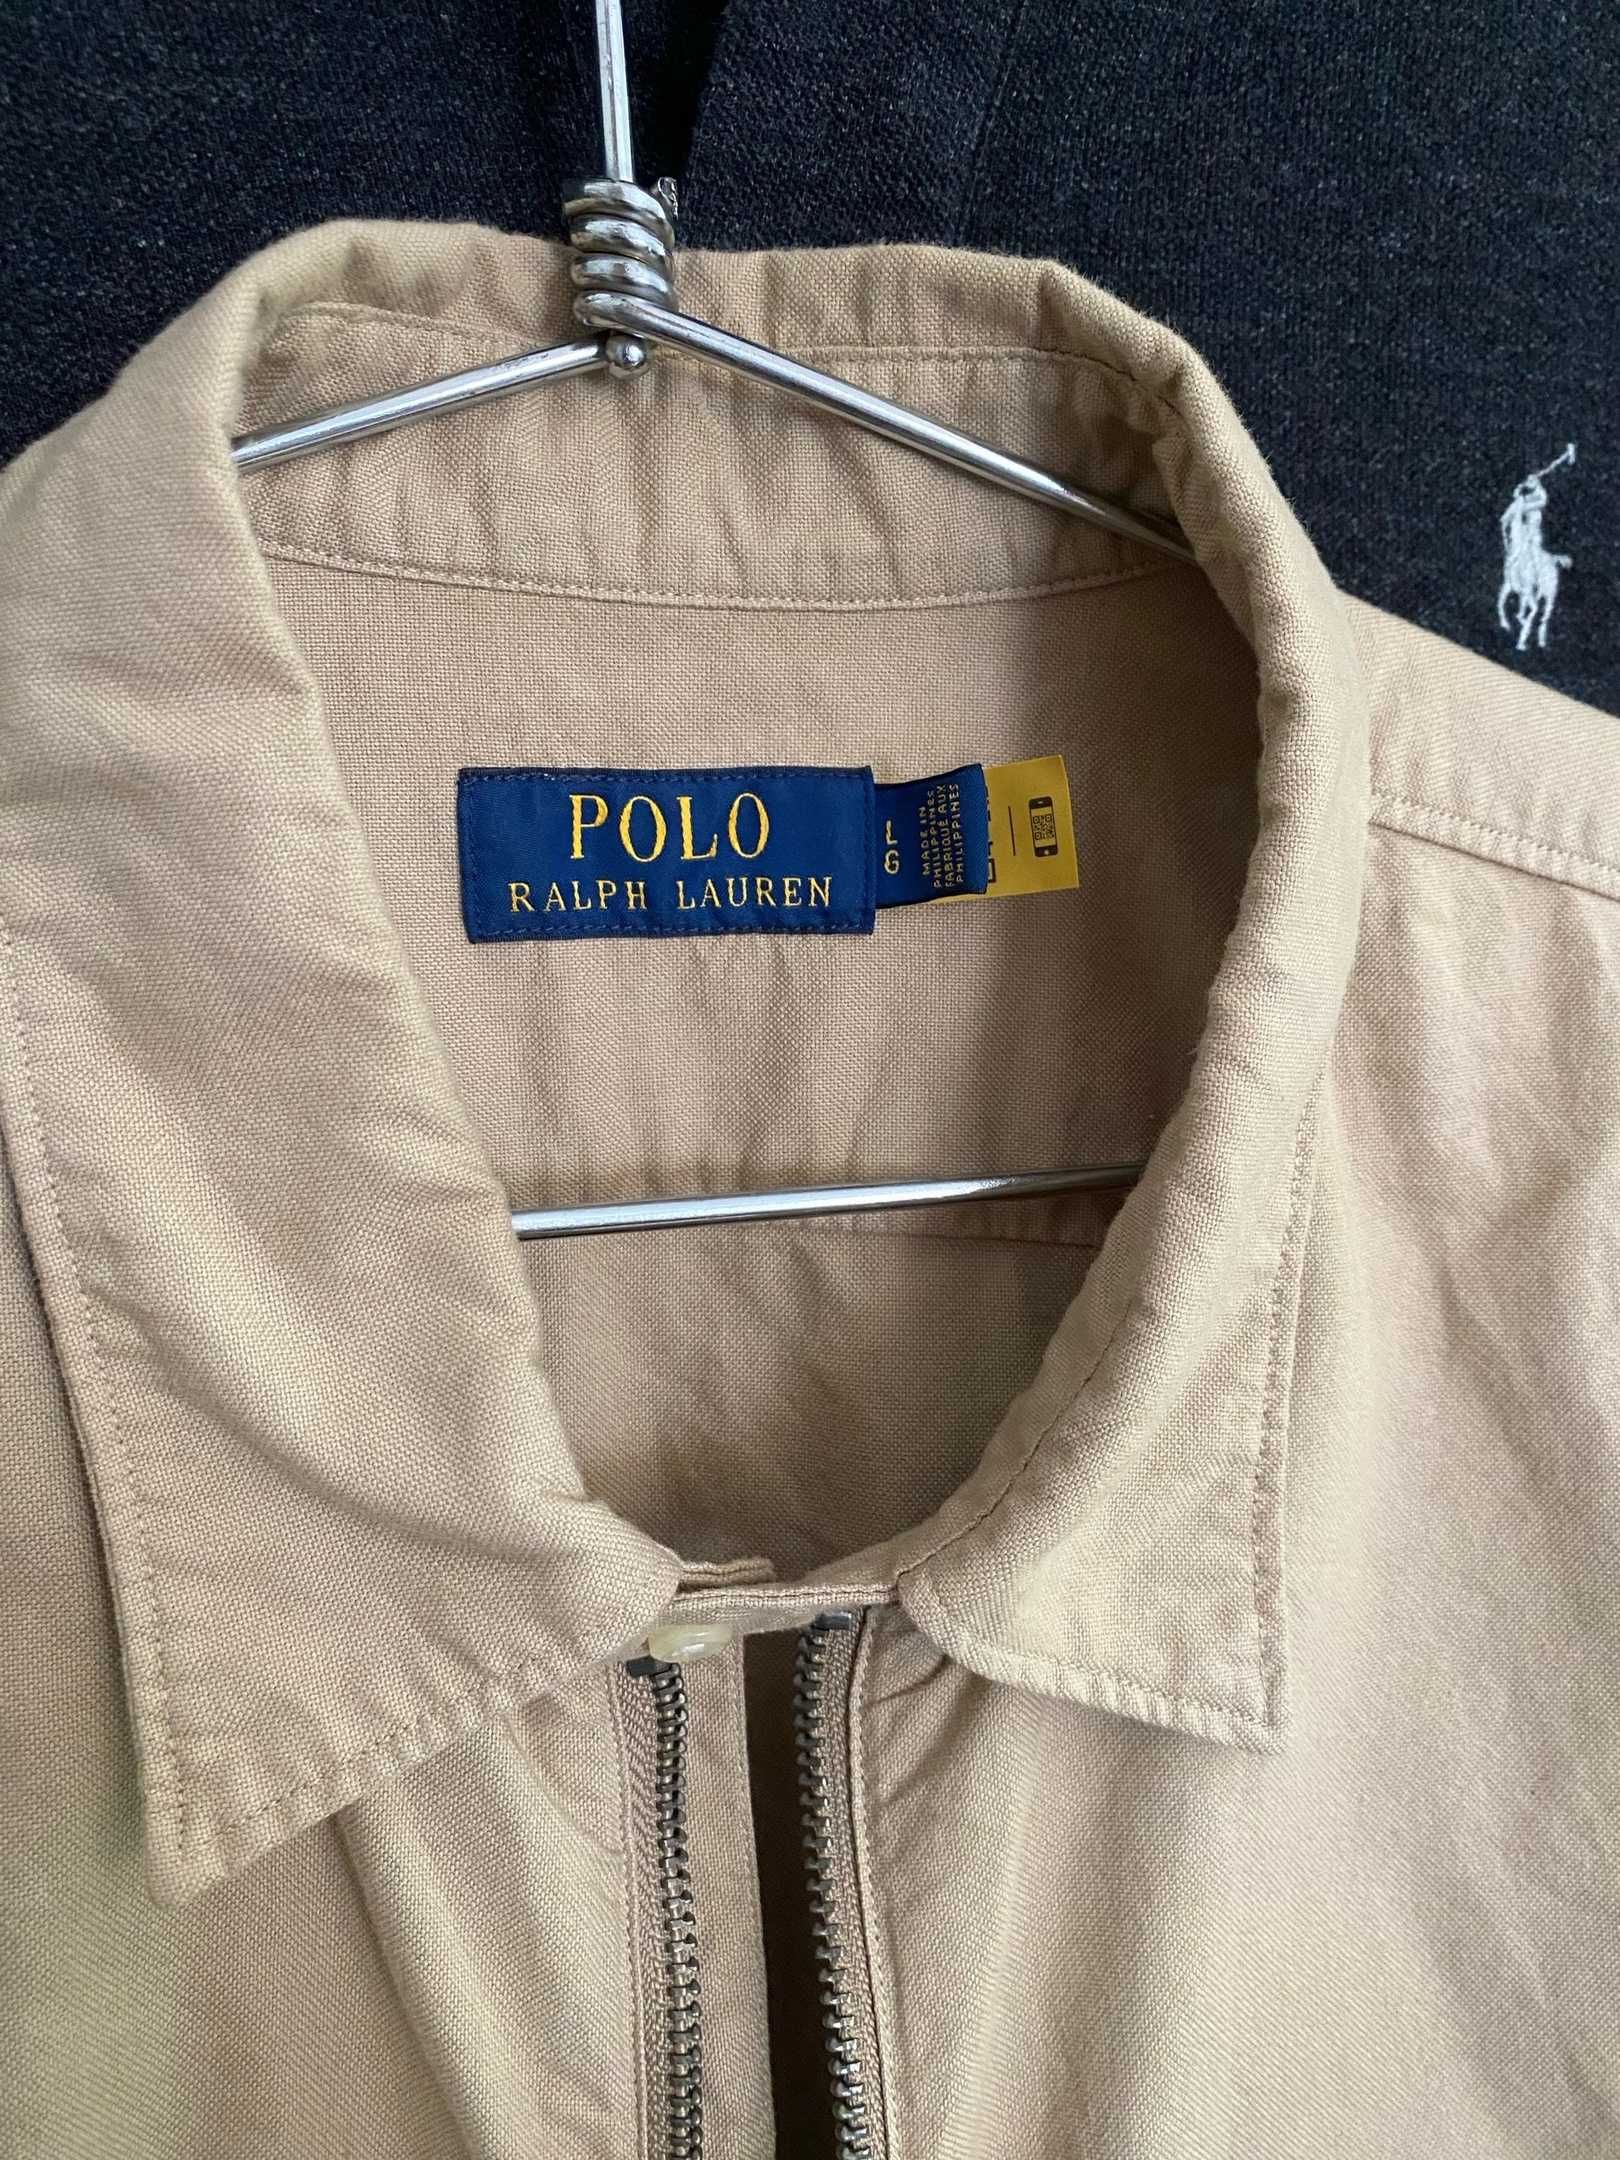 Bluza kurtka na zamek zip Polo Ralph Lauren najnowsza kolekcja, M, L